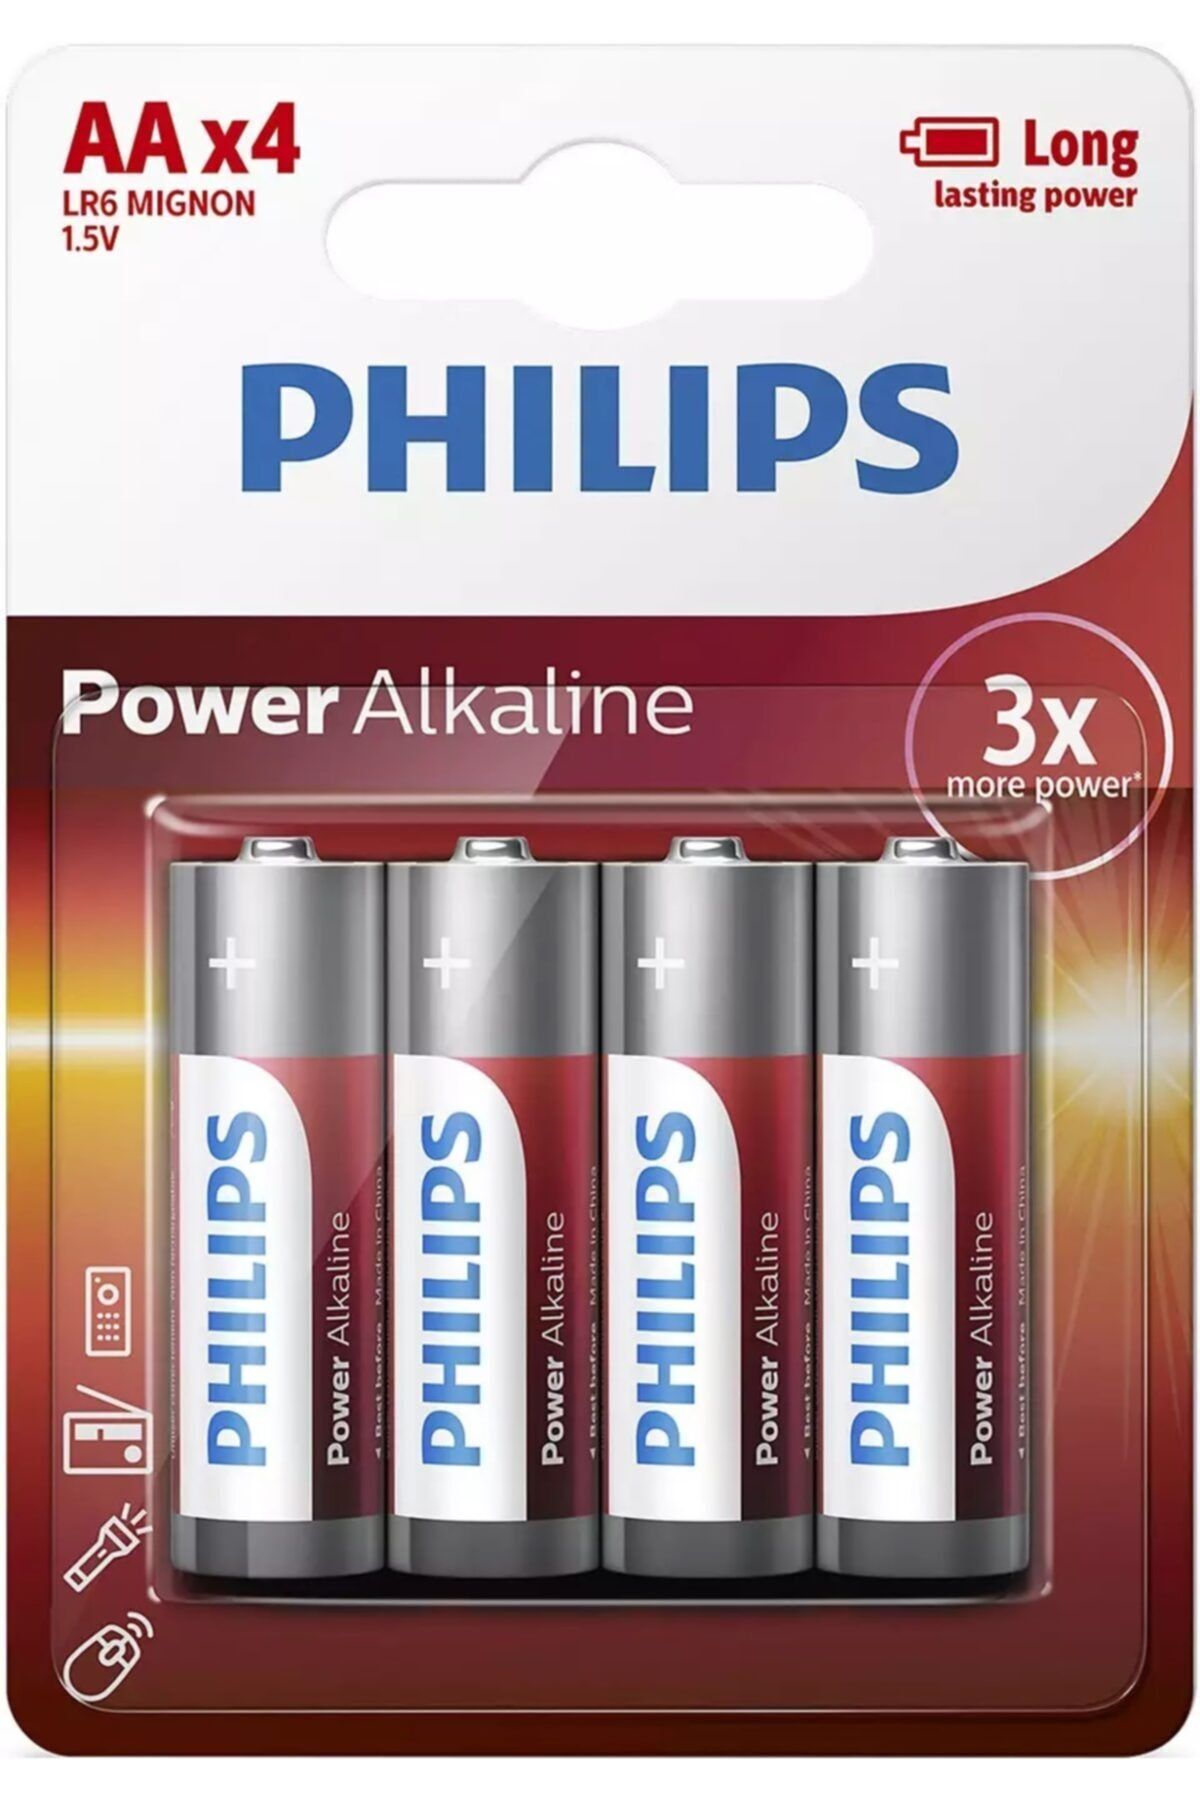 Philips Power Alkalin AA X4